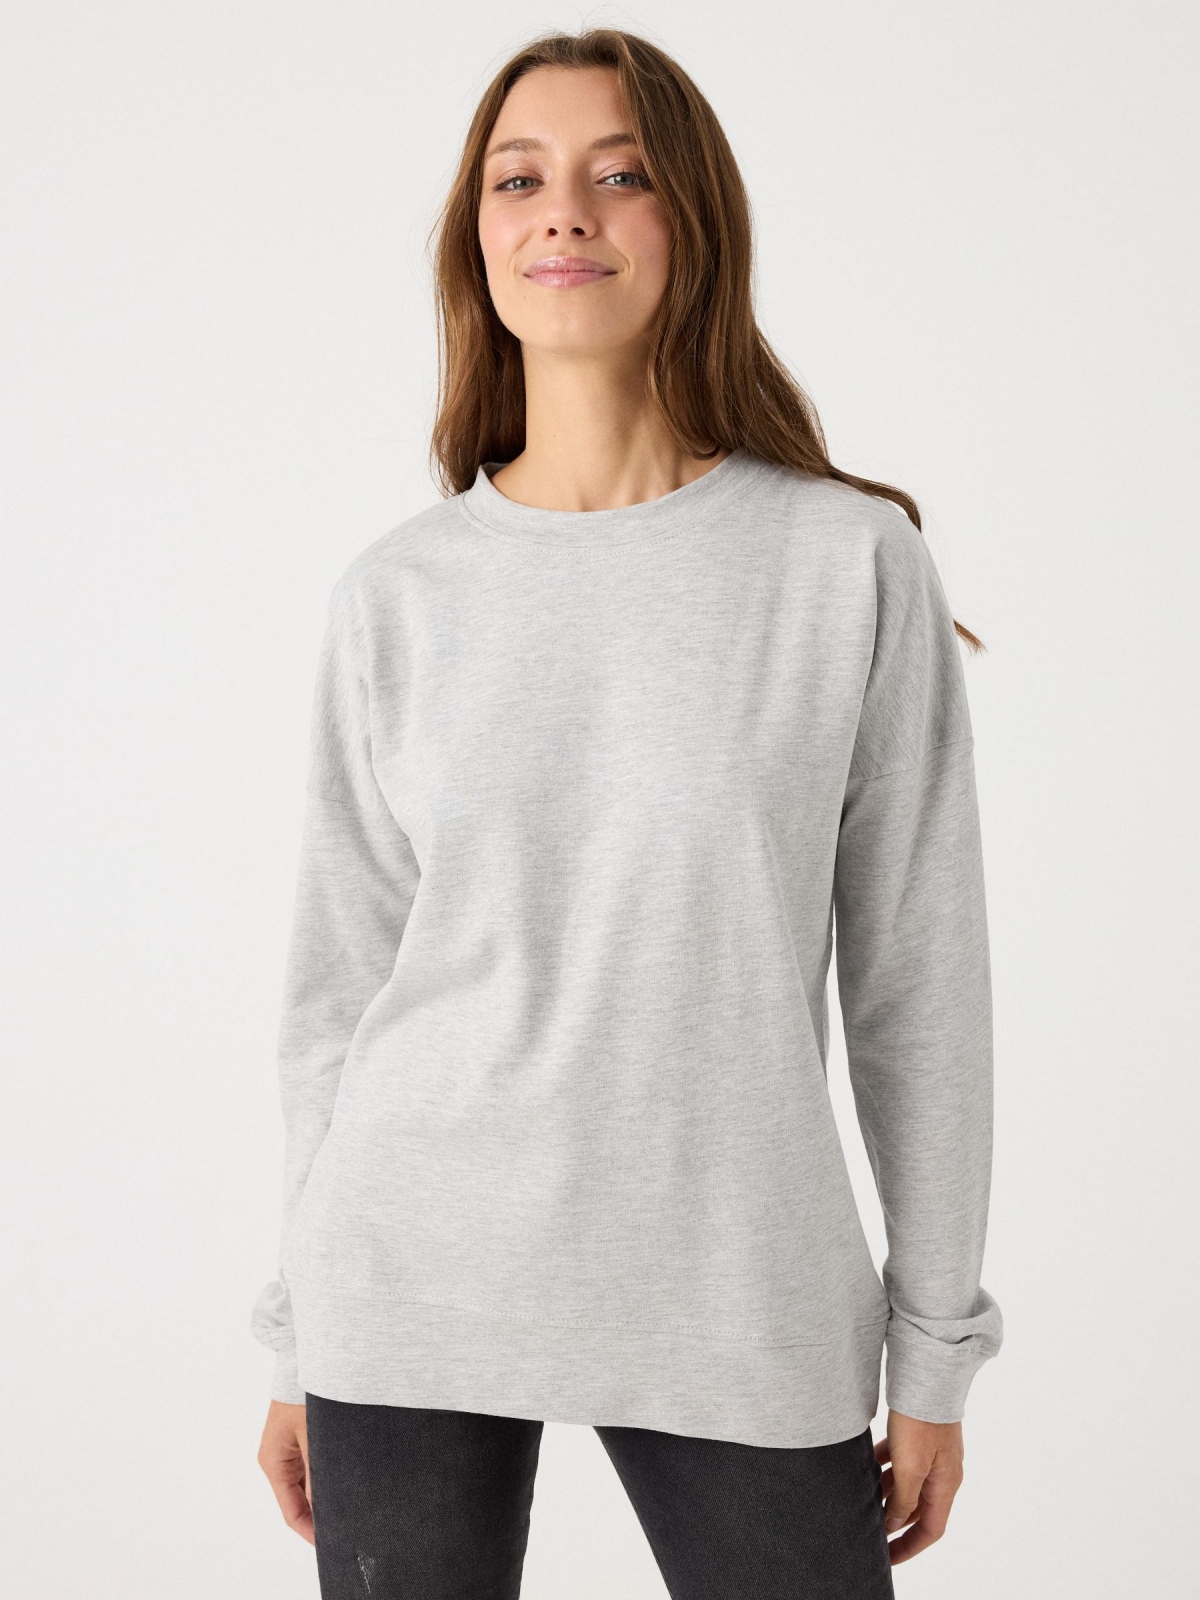 Basic round neck sweatshirt grey middle front view